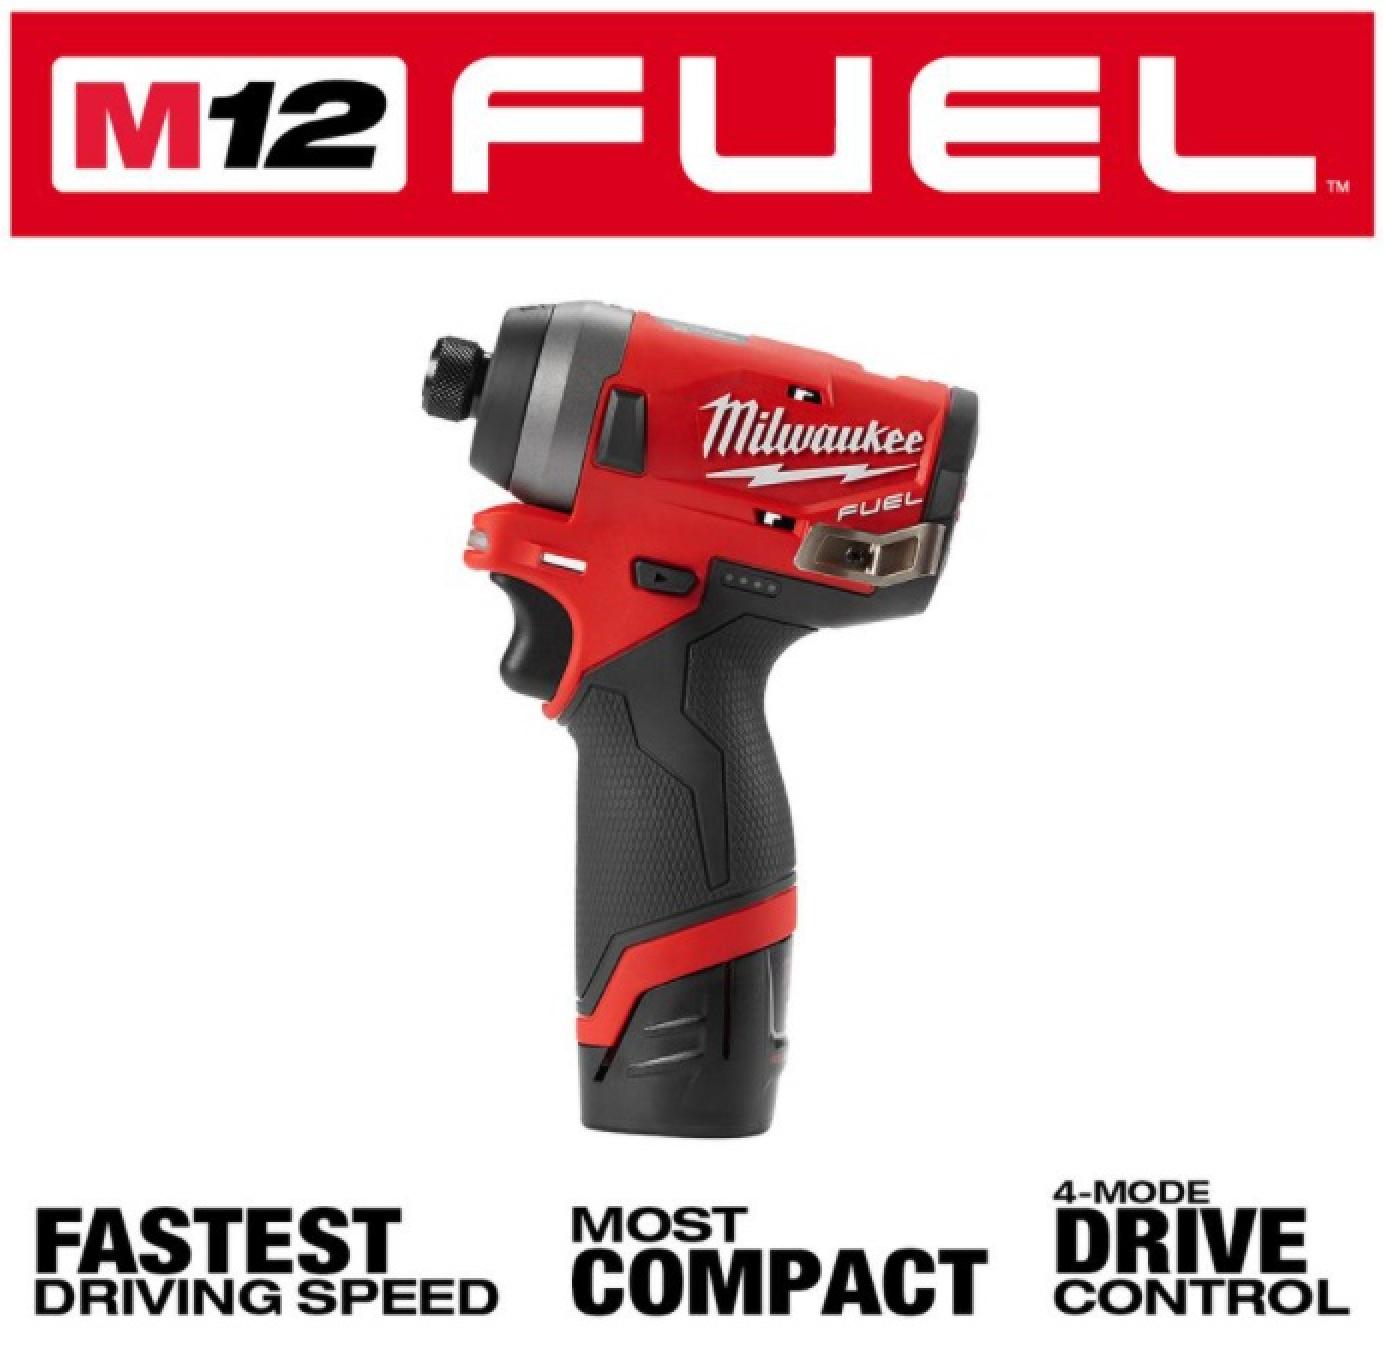 Milwaukee M12 FUEL™ impact